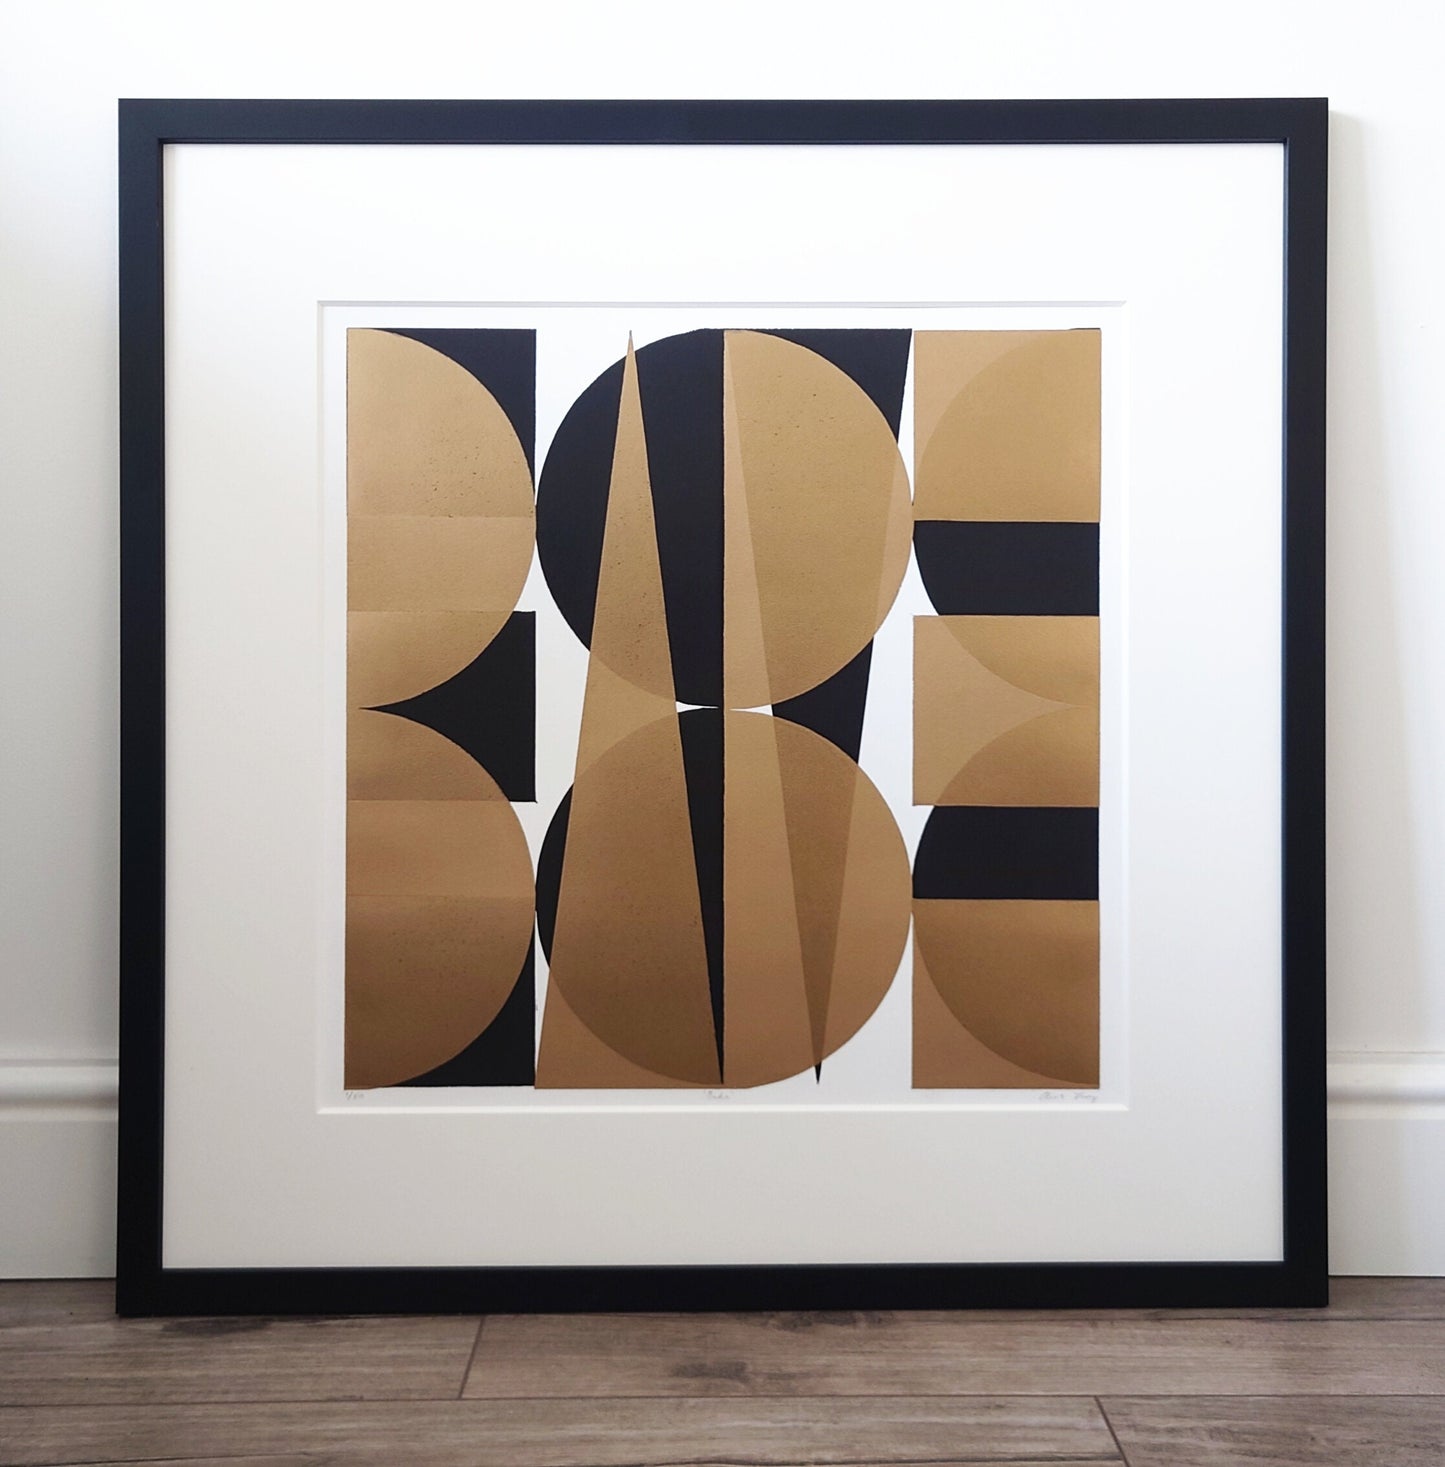 Babe (large format, Gold and Black) Hand printed Linocut Print - Original Art - Wall Art, Home decor, Contemporary Art